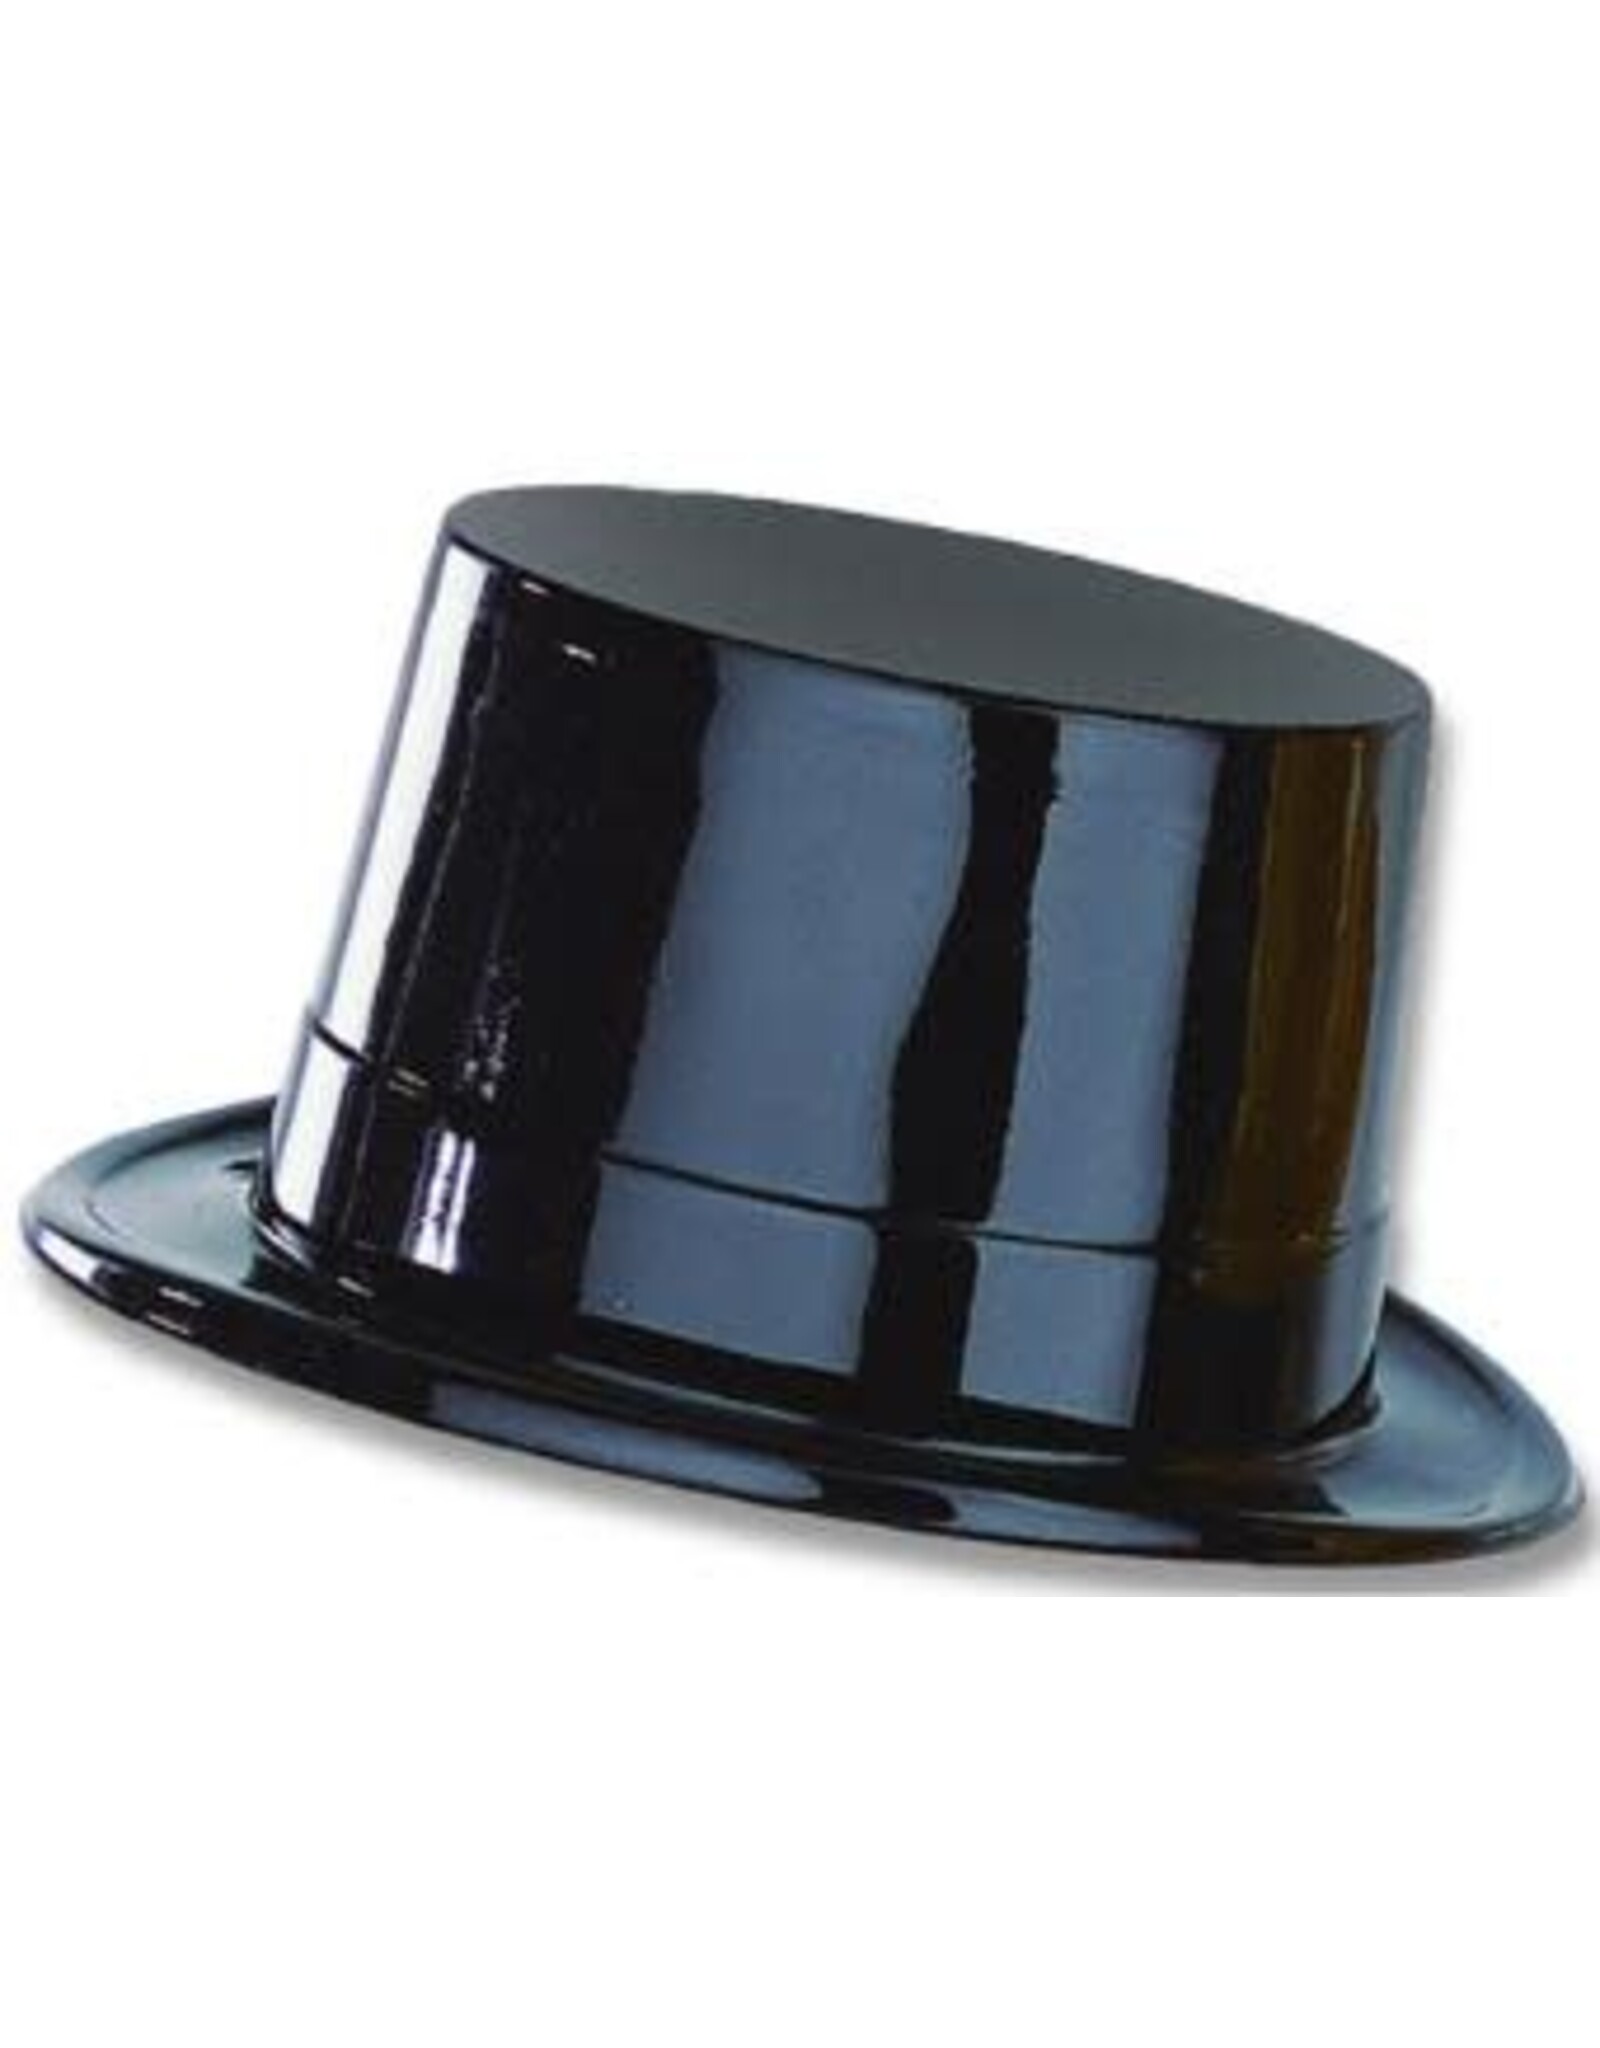 Beistle Topper Hat Black Plastic